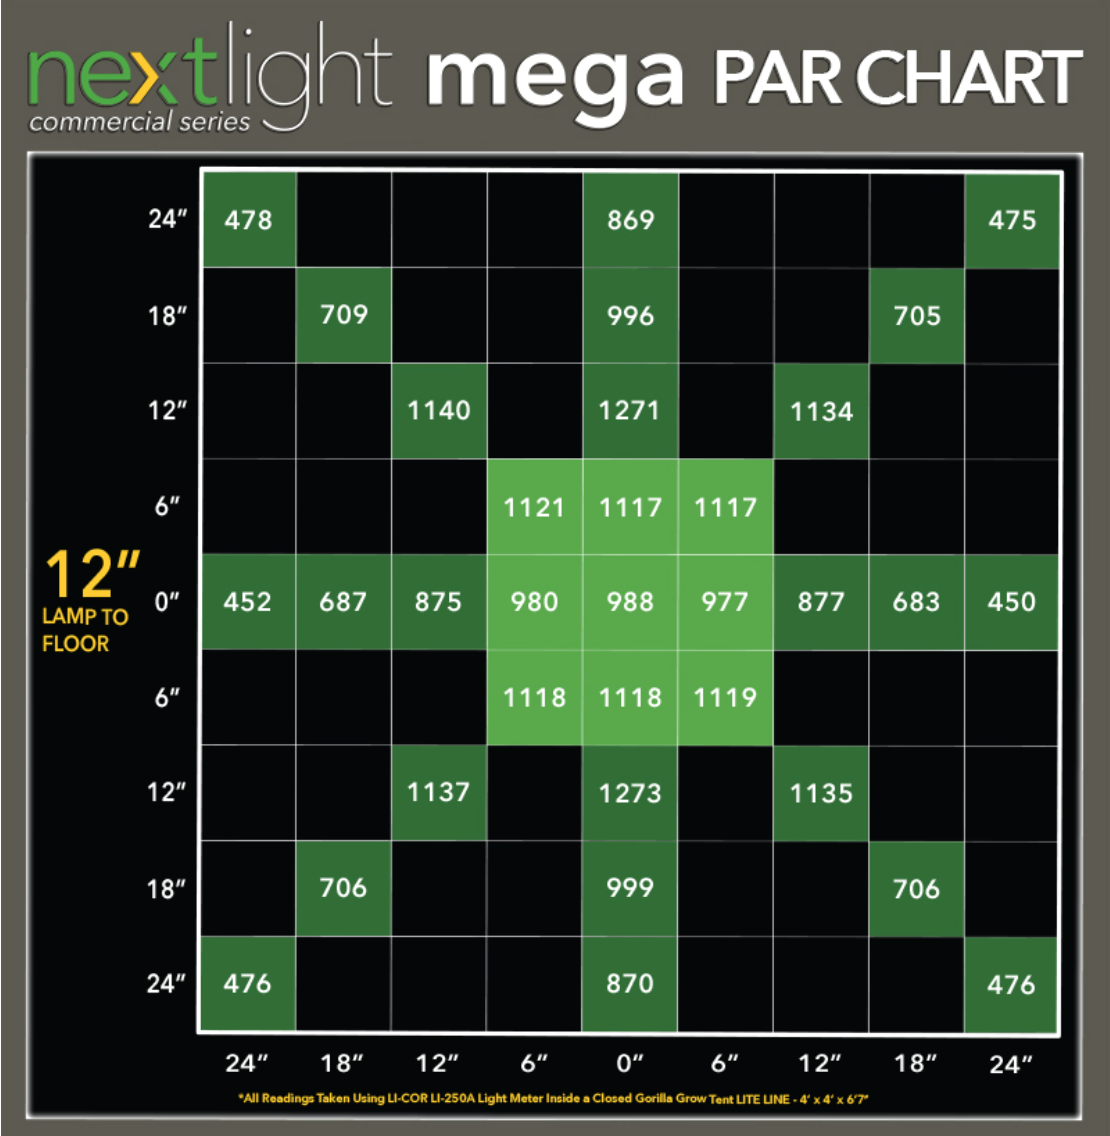 NextLight Mega PAR Chart